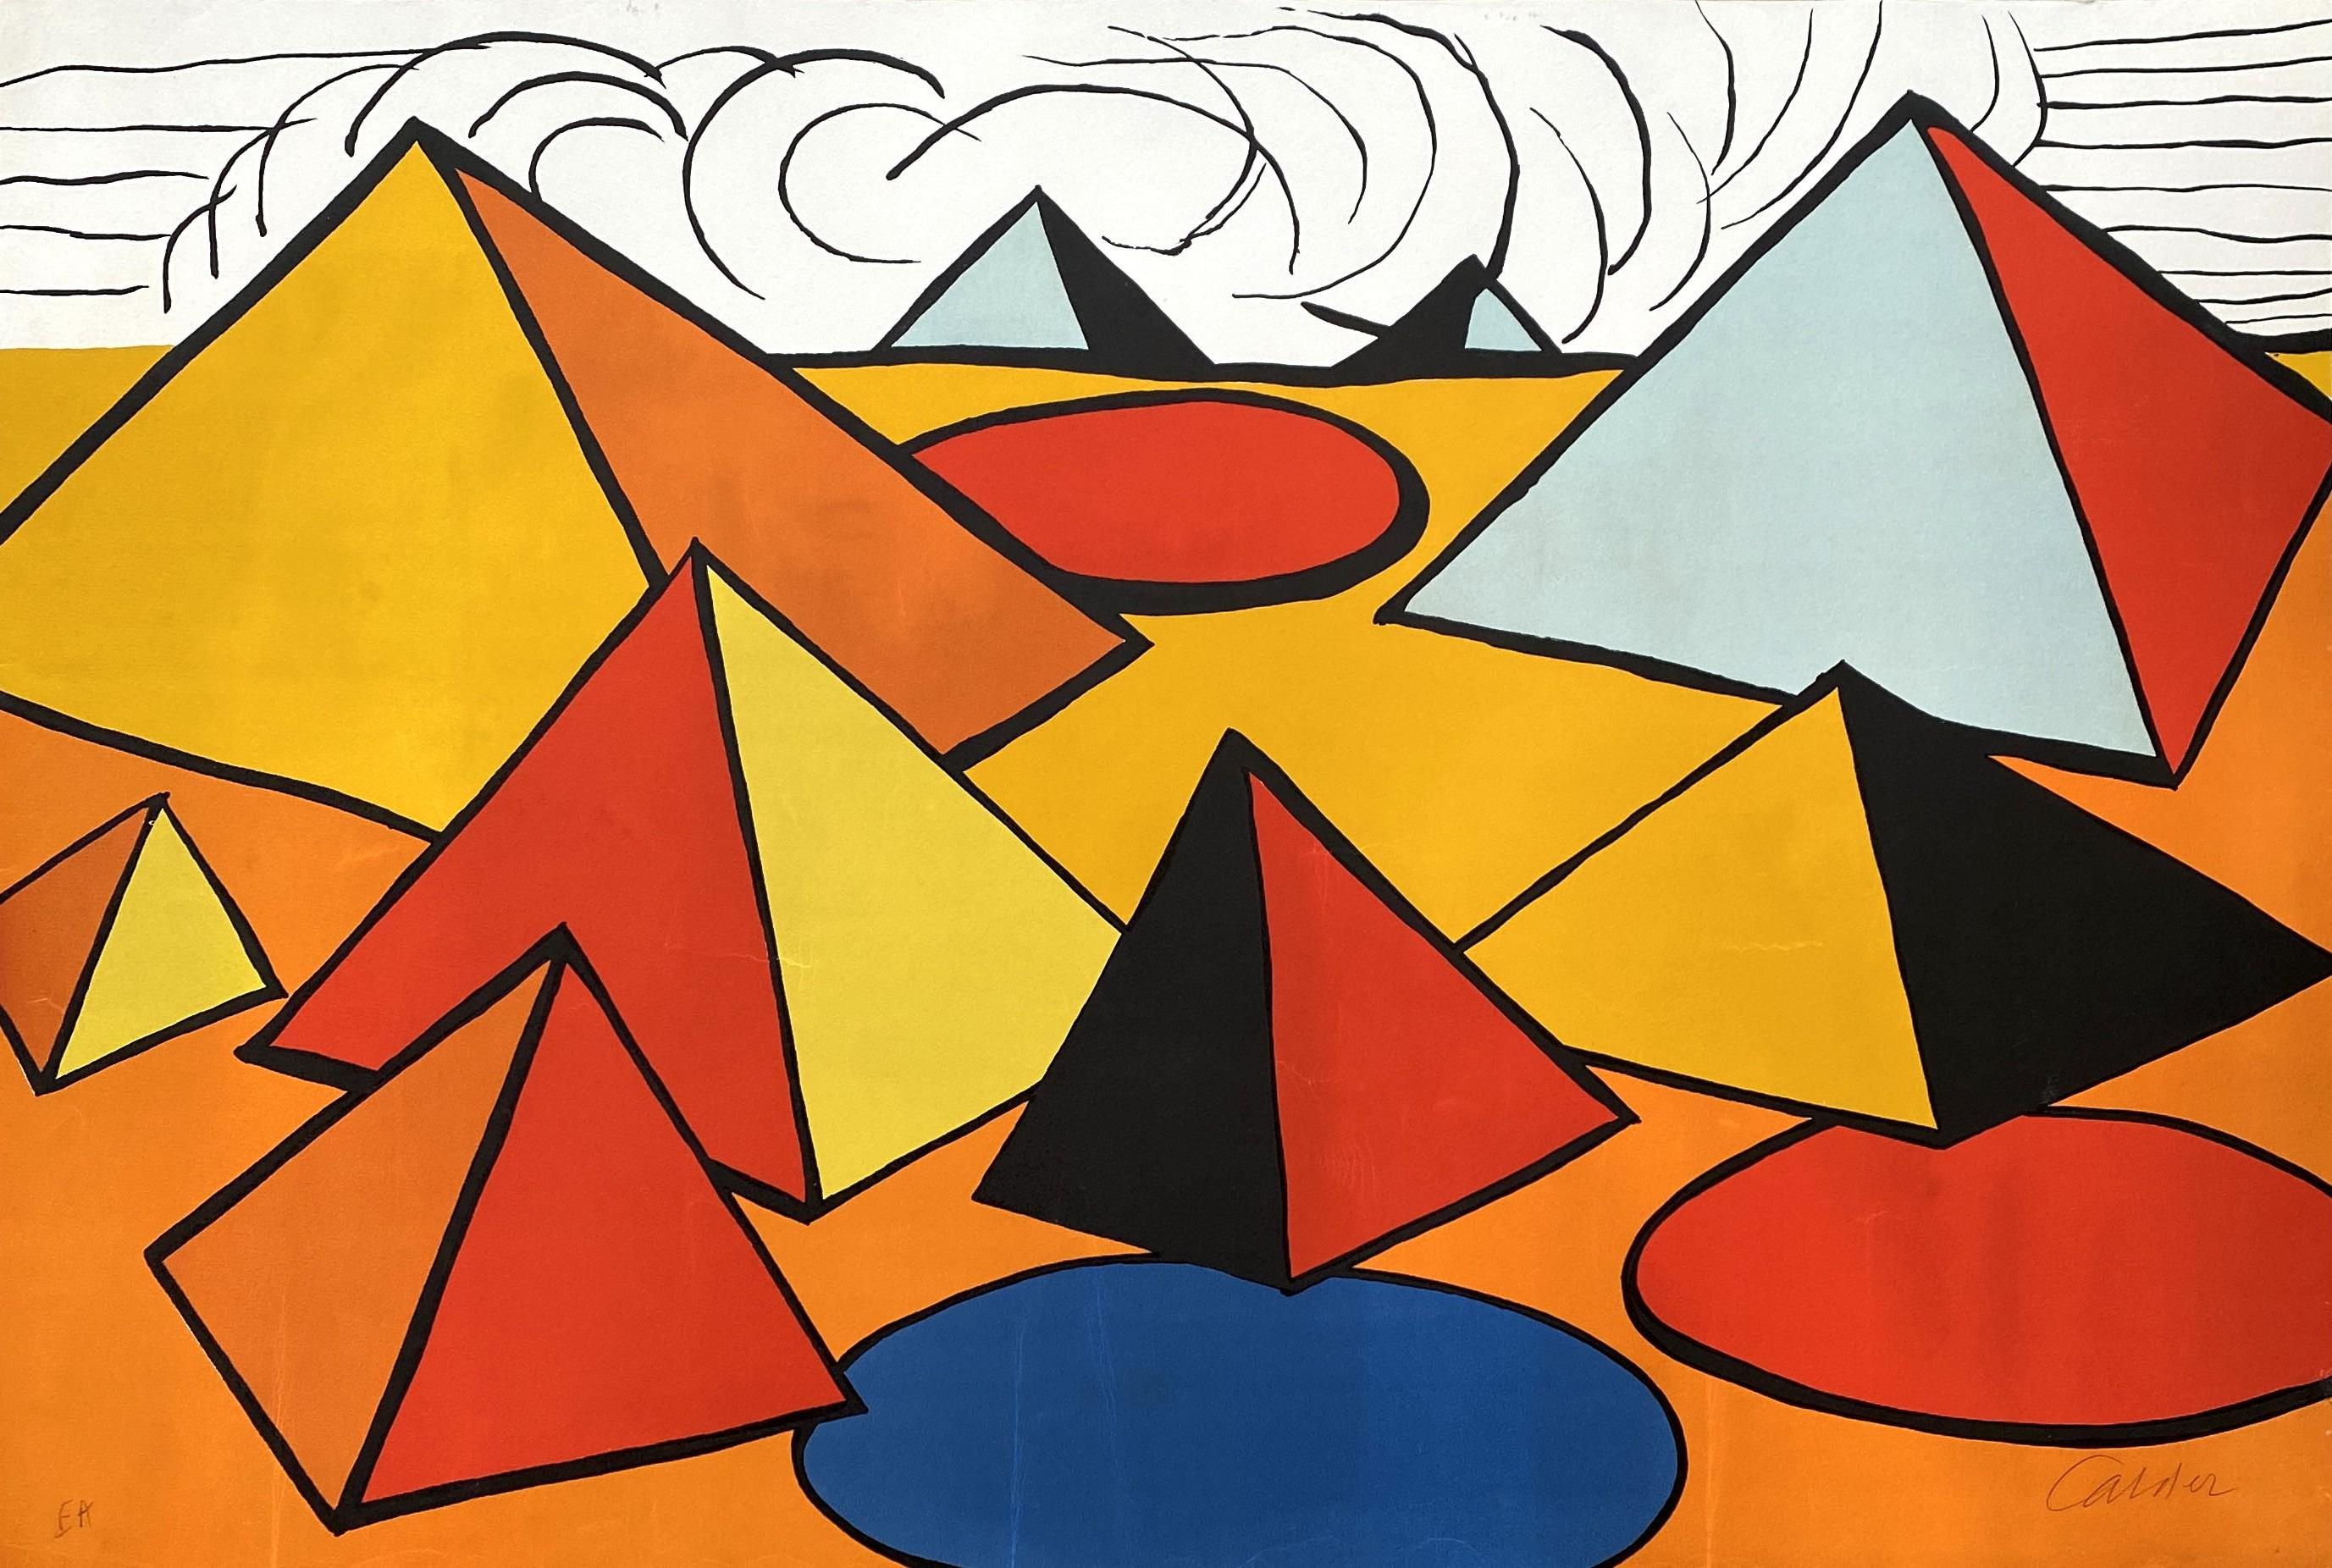 Alexander Calder Abstract Print - Egypt, Multicolored Pyramids - Original Lithograph Hand Signed 